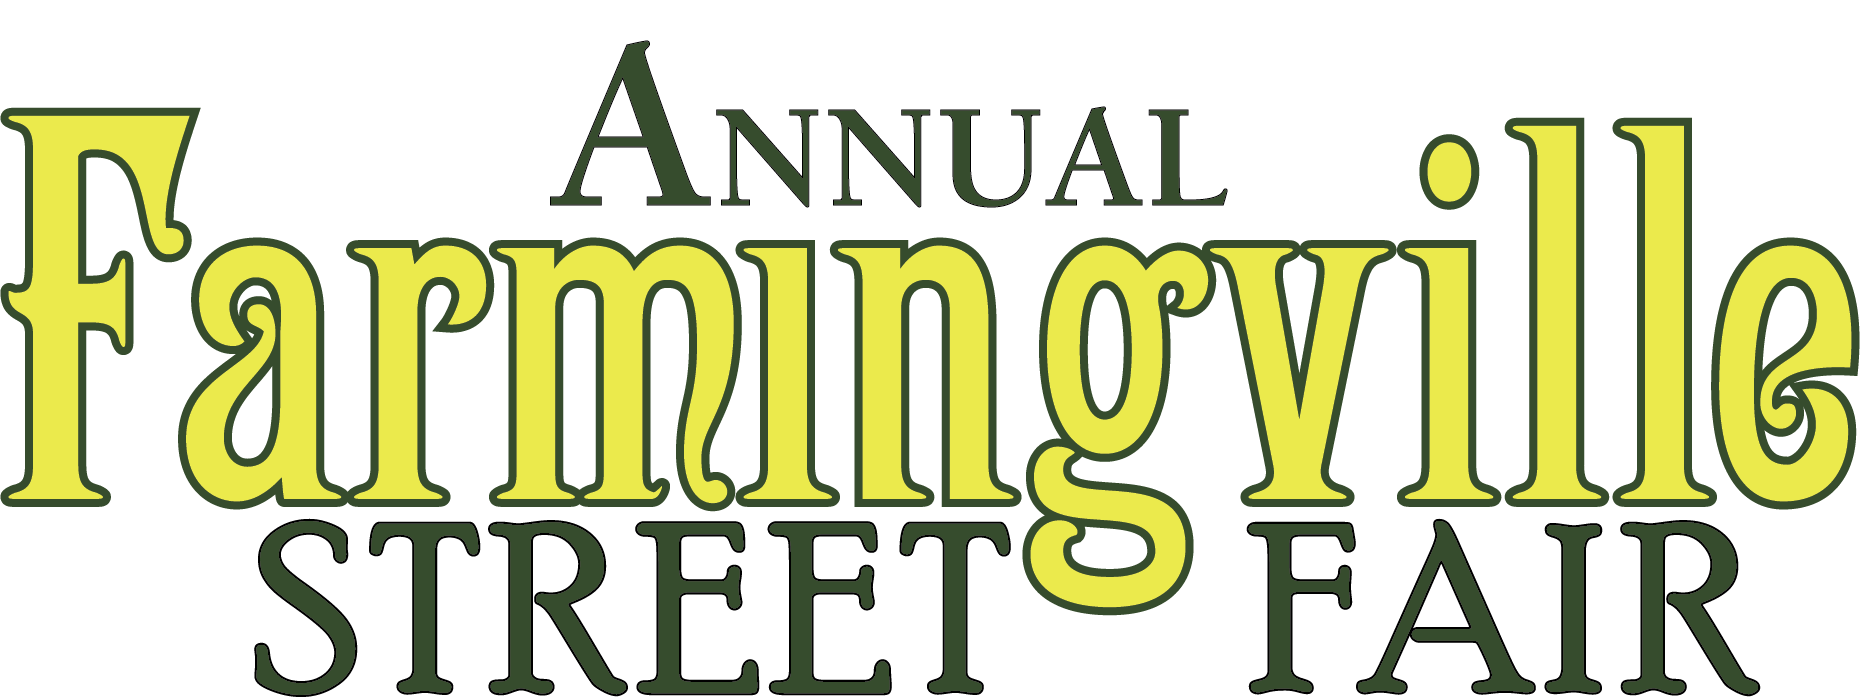 Farmingville Street Fair logo